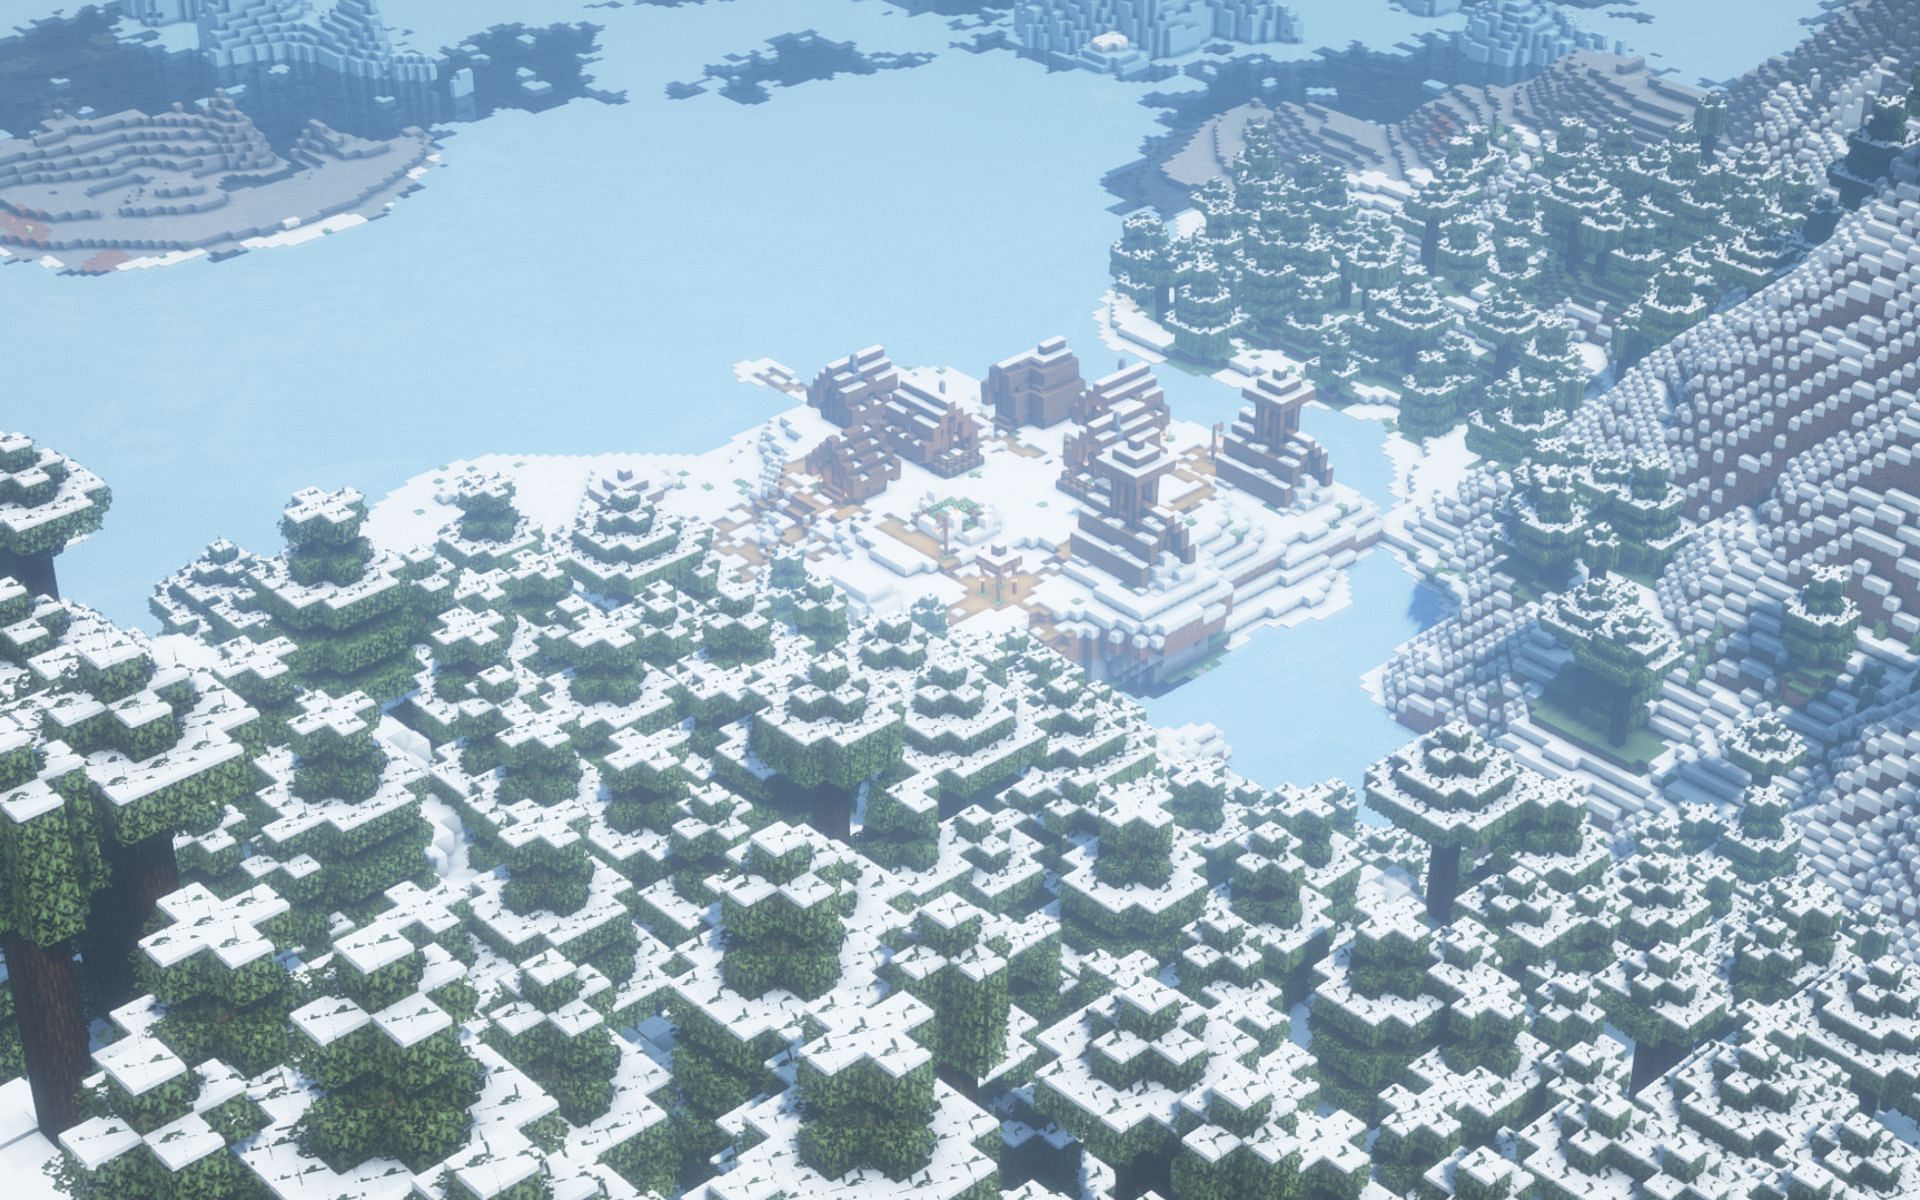 This seed has two snow-based villages (Image via reddit/u/Micarrick)